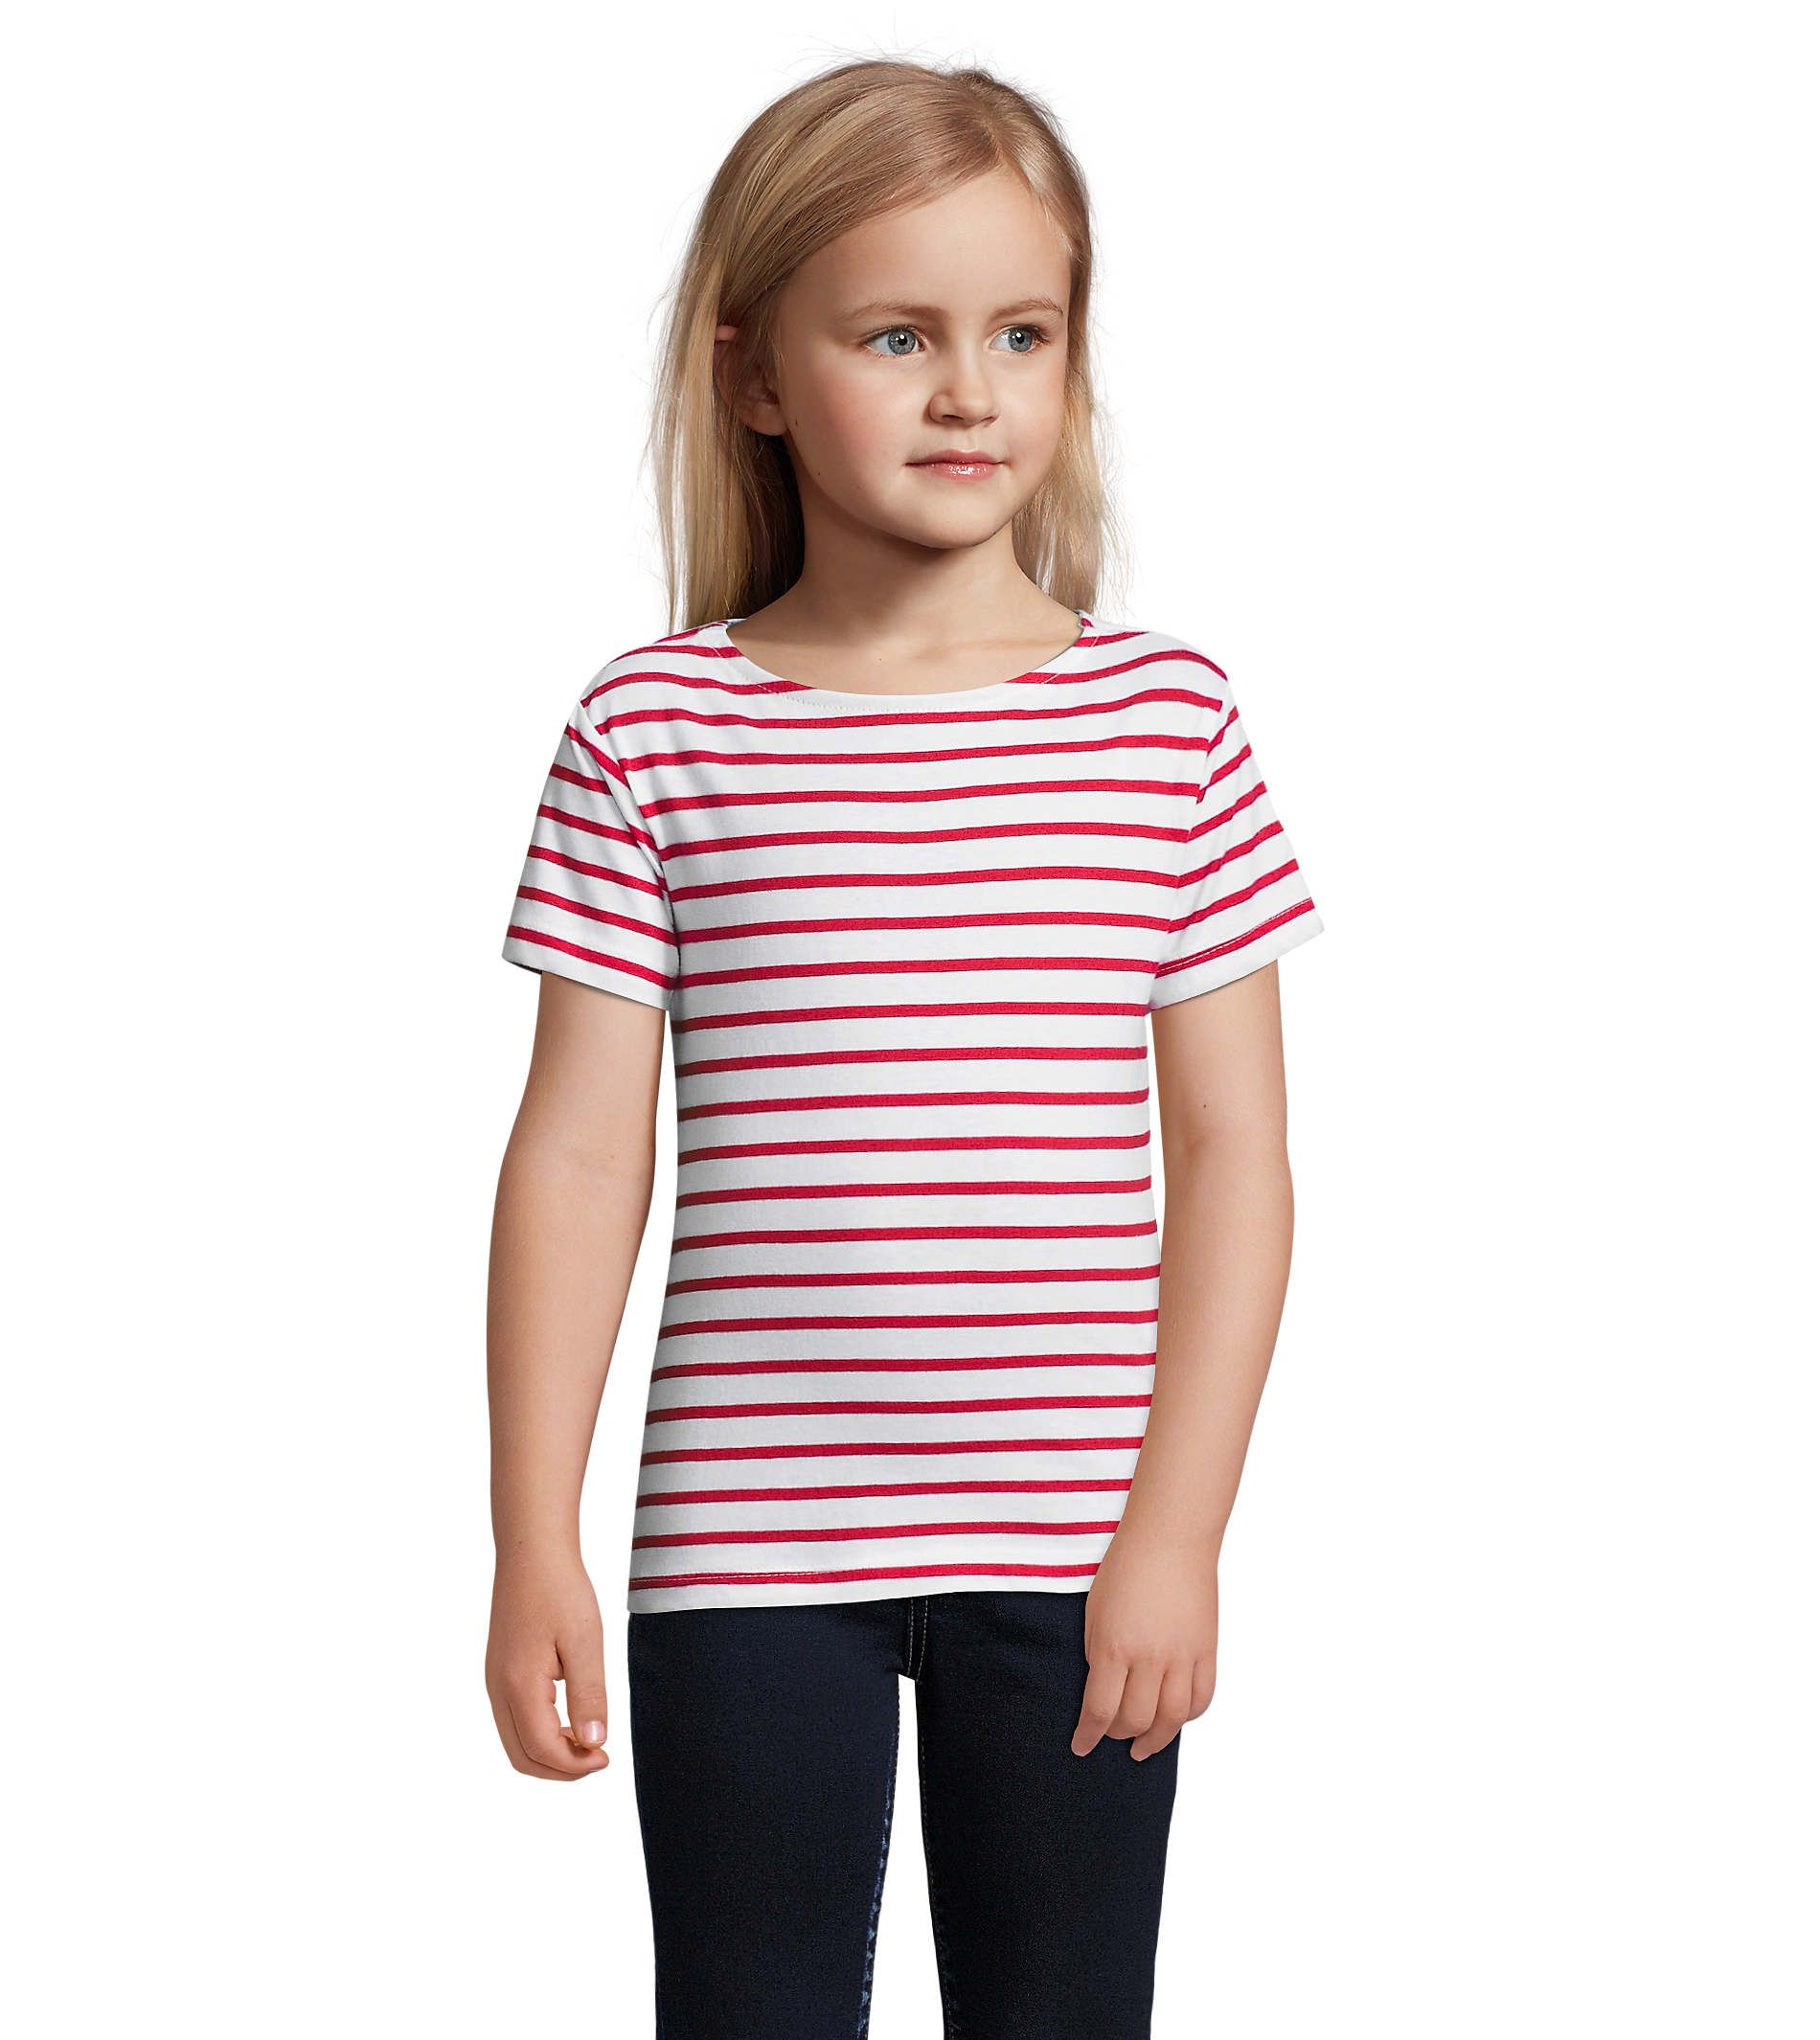 Miles kids. Детские футболки комбинированные с полоской. MSGM Kids t Shirt Red and Silver.